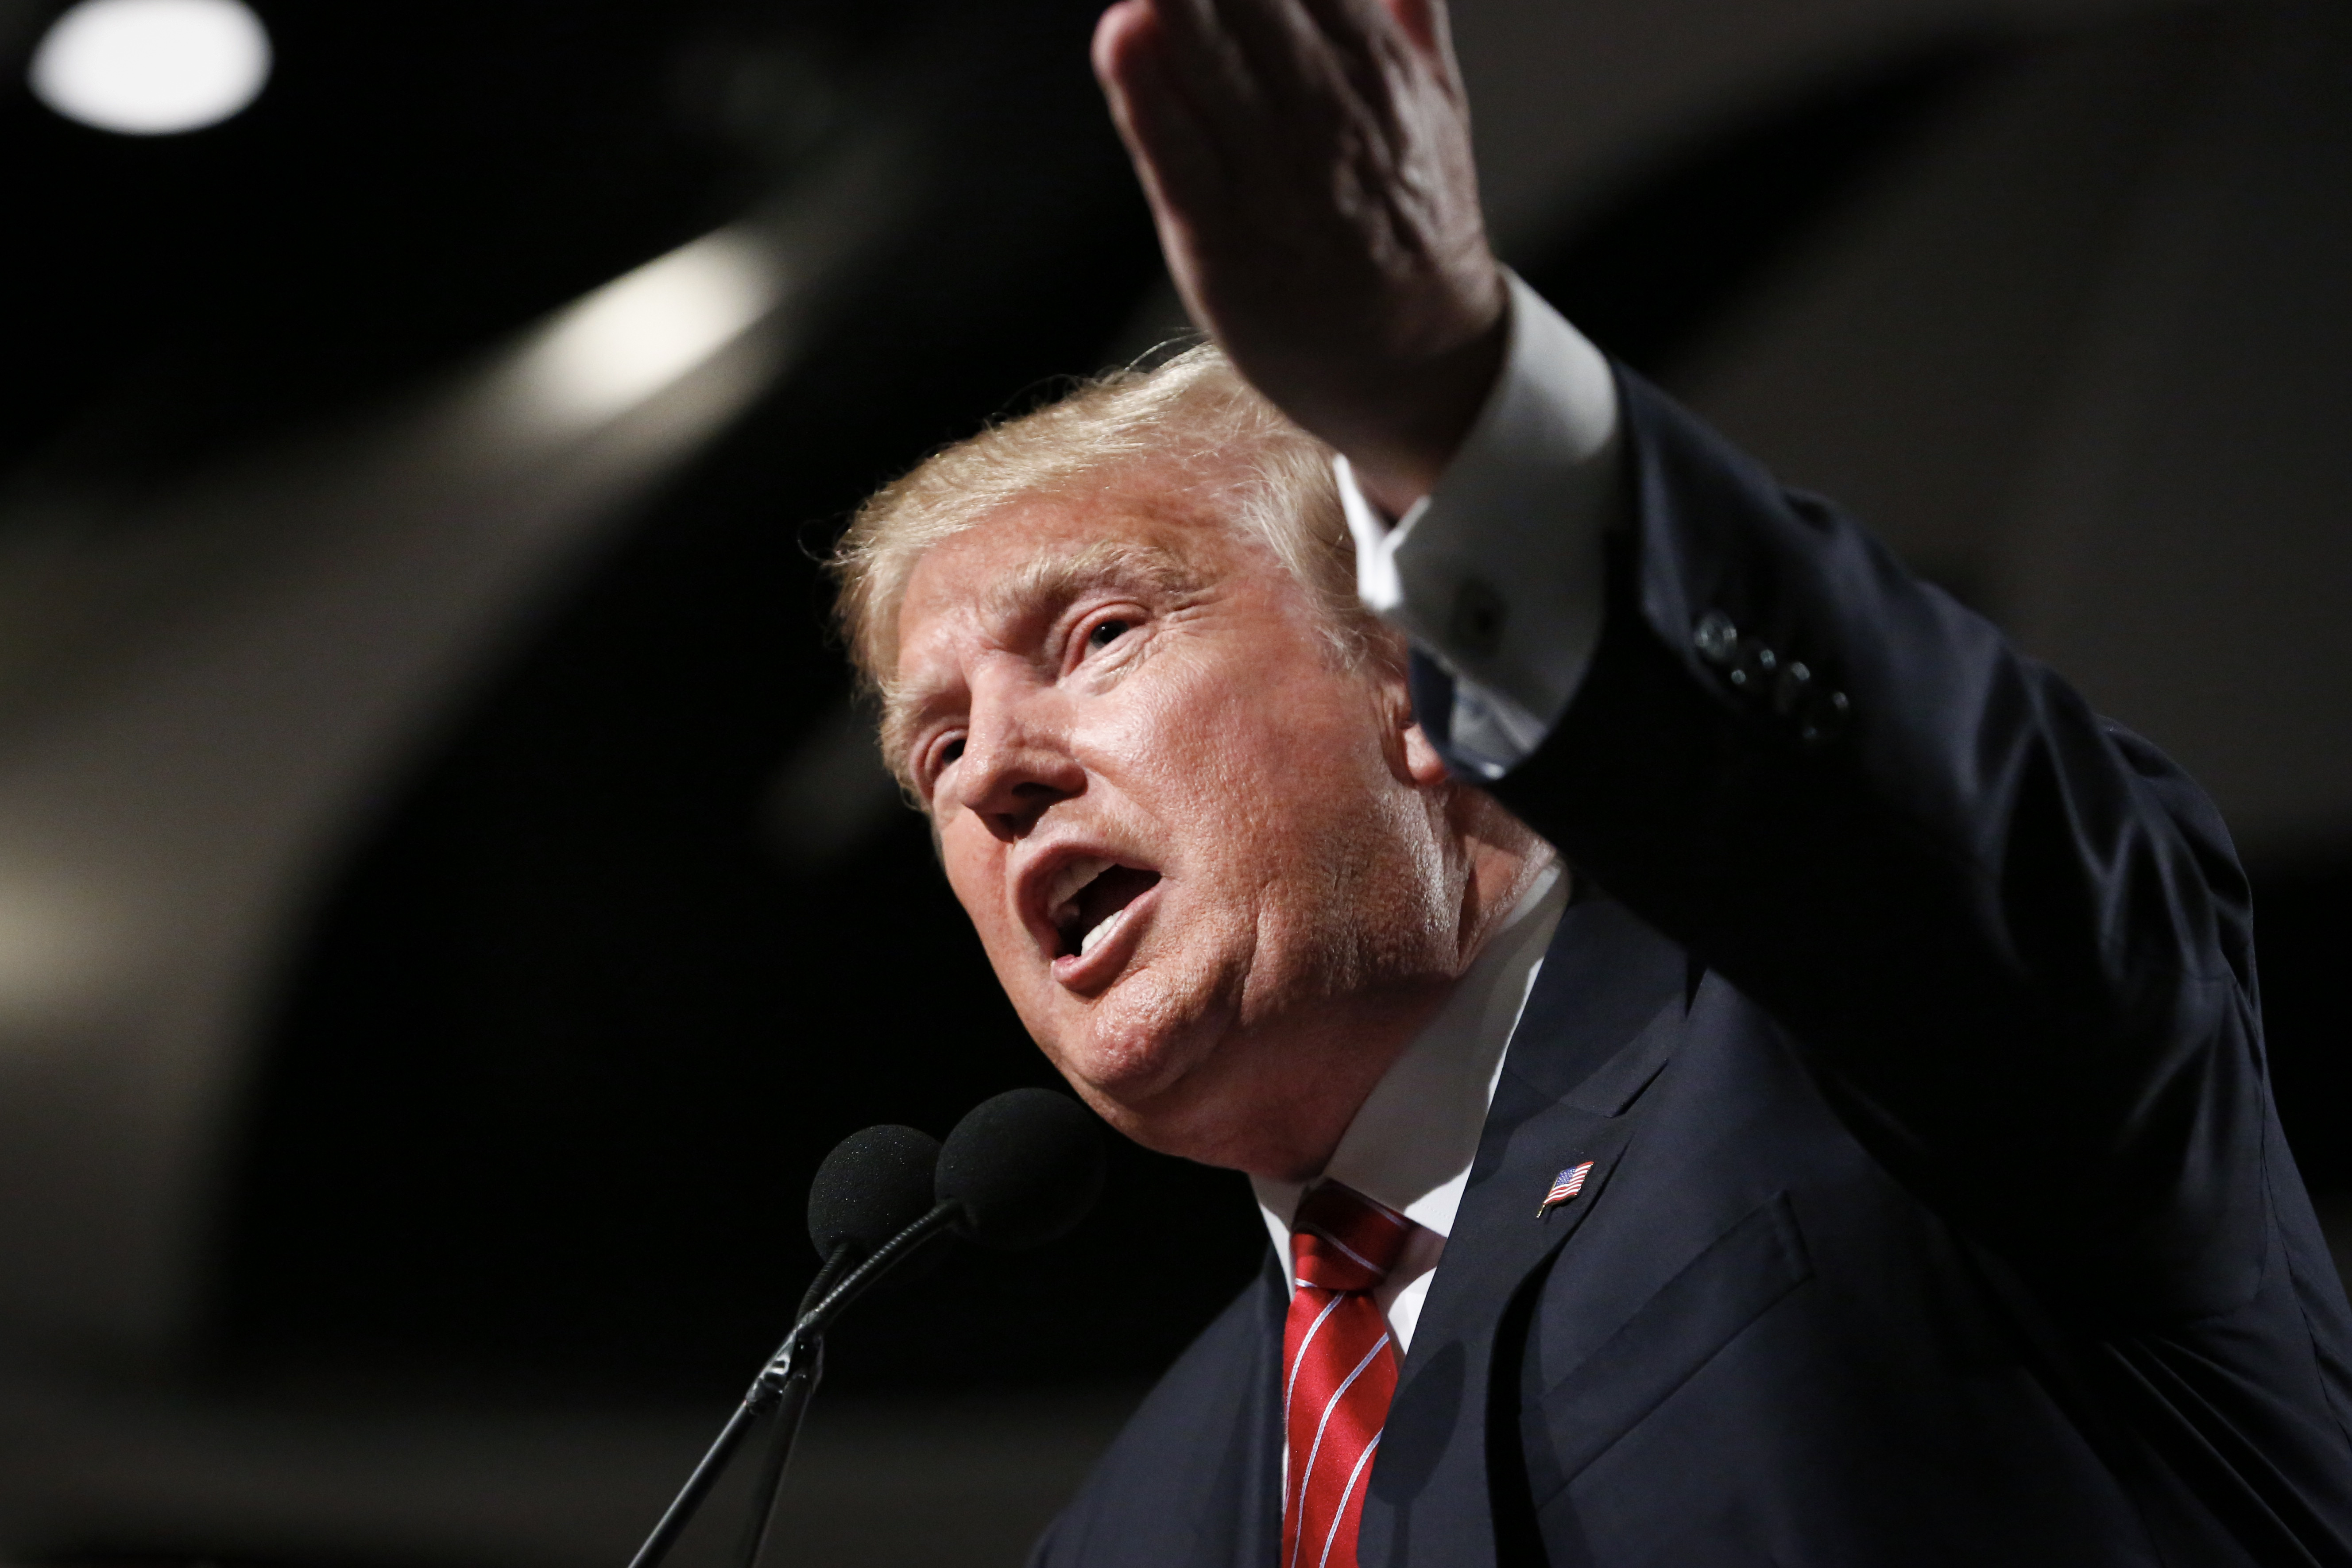 Republican presidential candidate Donald Trump speaks during a 2015 campaign event in Phoenix. (CNS photo/Nancy Wiechec)